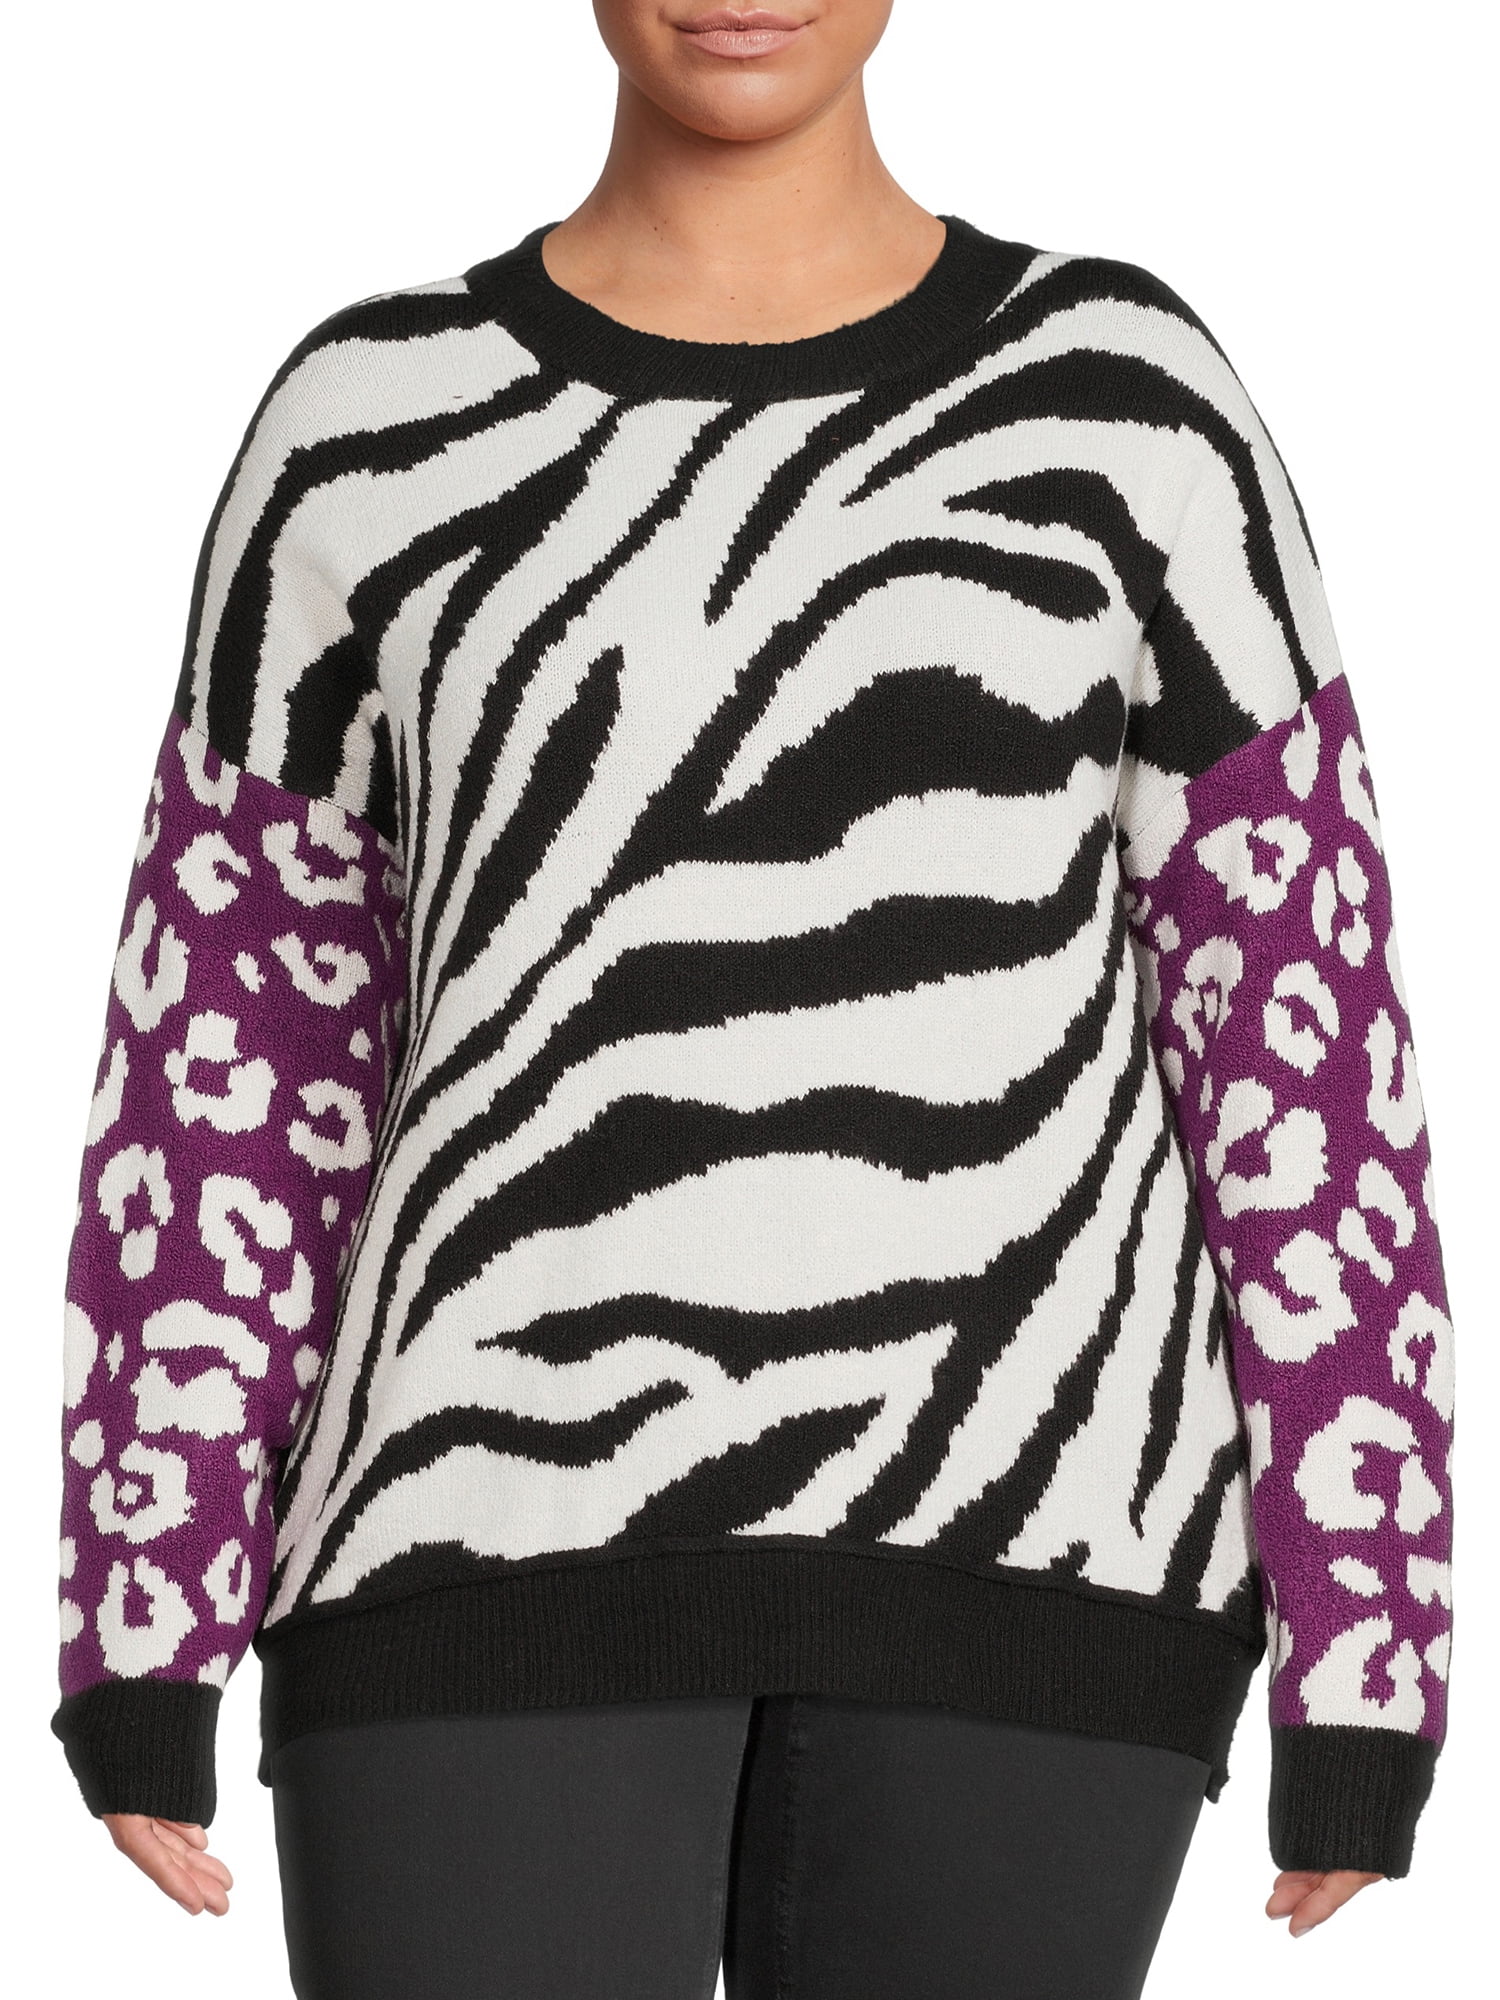 Terra & Sky Women's Plus Size Drop Shoulder Print Sweater, Midweight